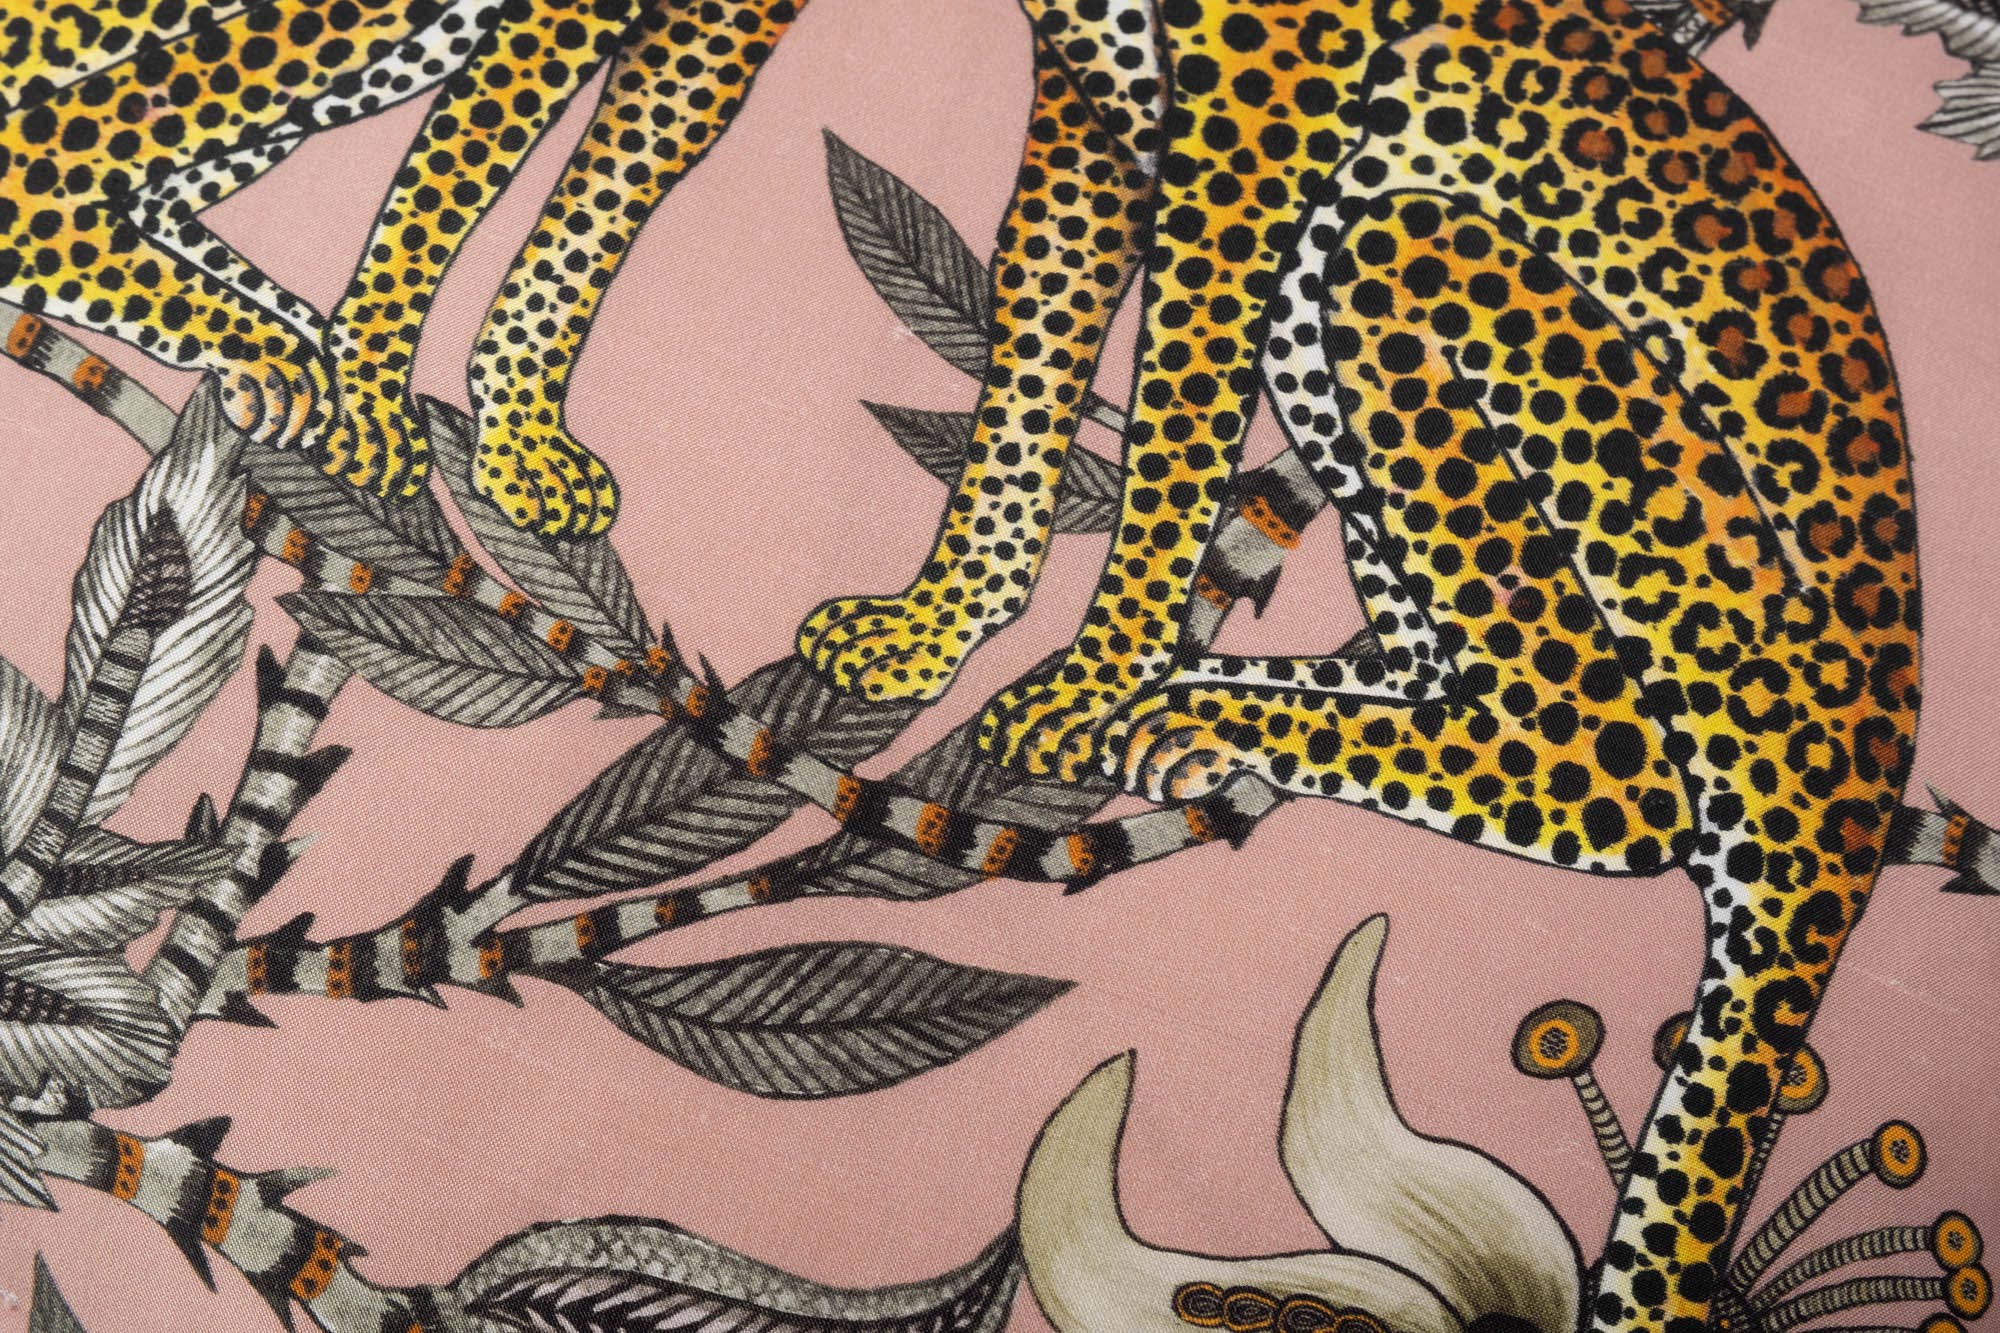 Kavir Leopard Print Fabric Pattern Pillow - Liberty Maniacs